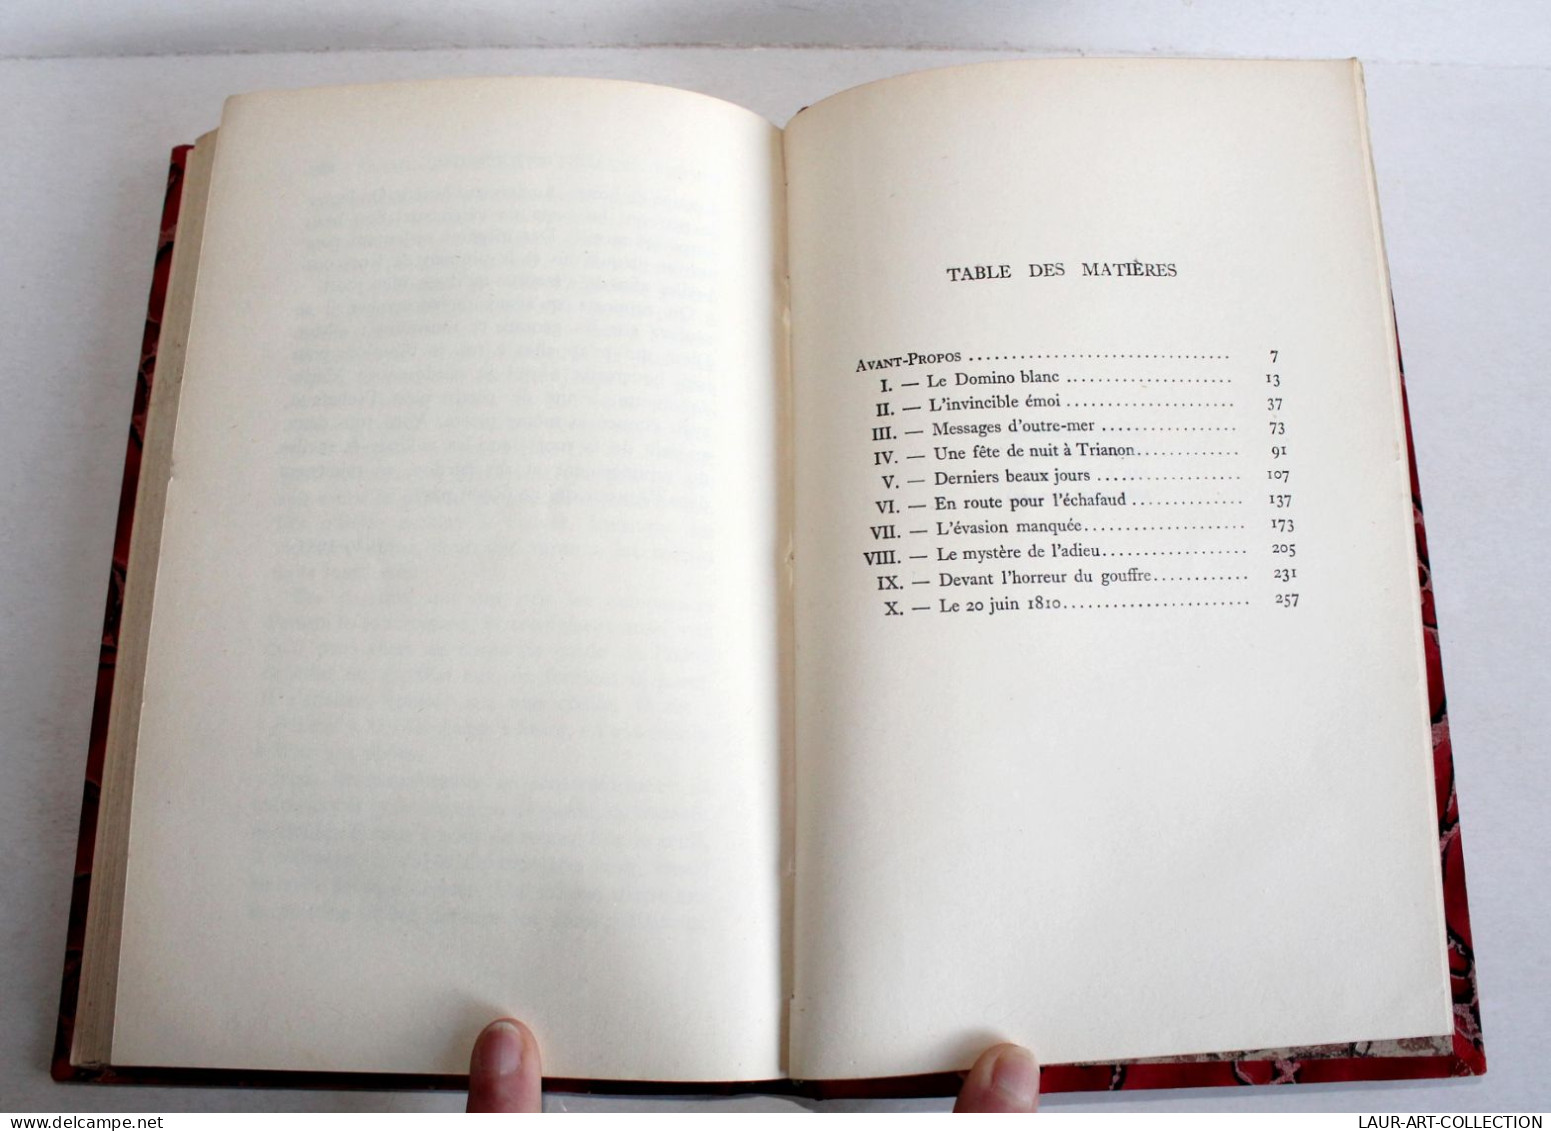 MARIE ANTOINETTE ET AXEL FERSEN Par EMILE BAUMANN 1931 EDITIONS BERNARD GRASSET / ANCIEN LIVRE XXe SIECLE (2603.83) - 1901-1940